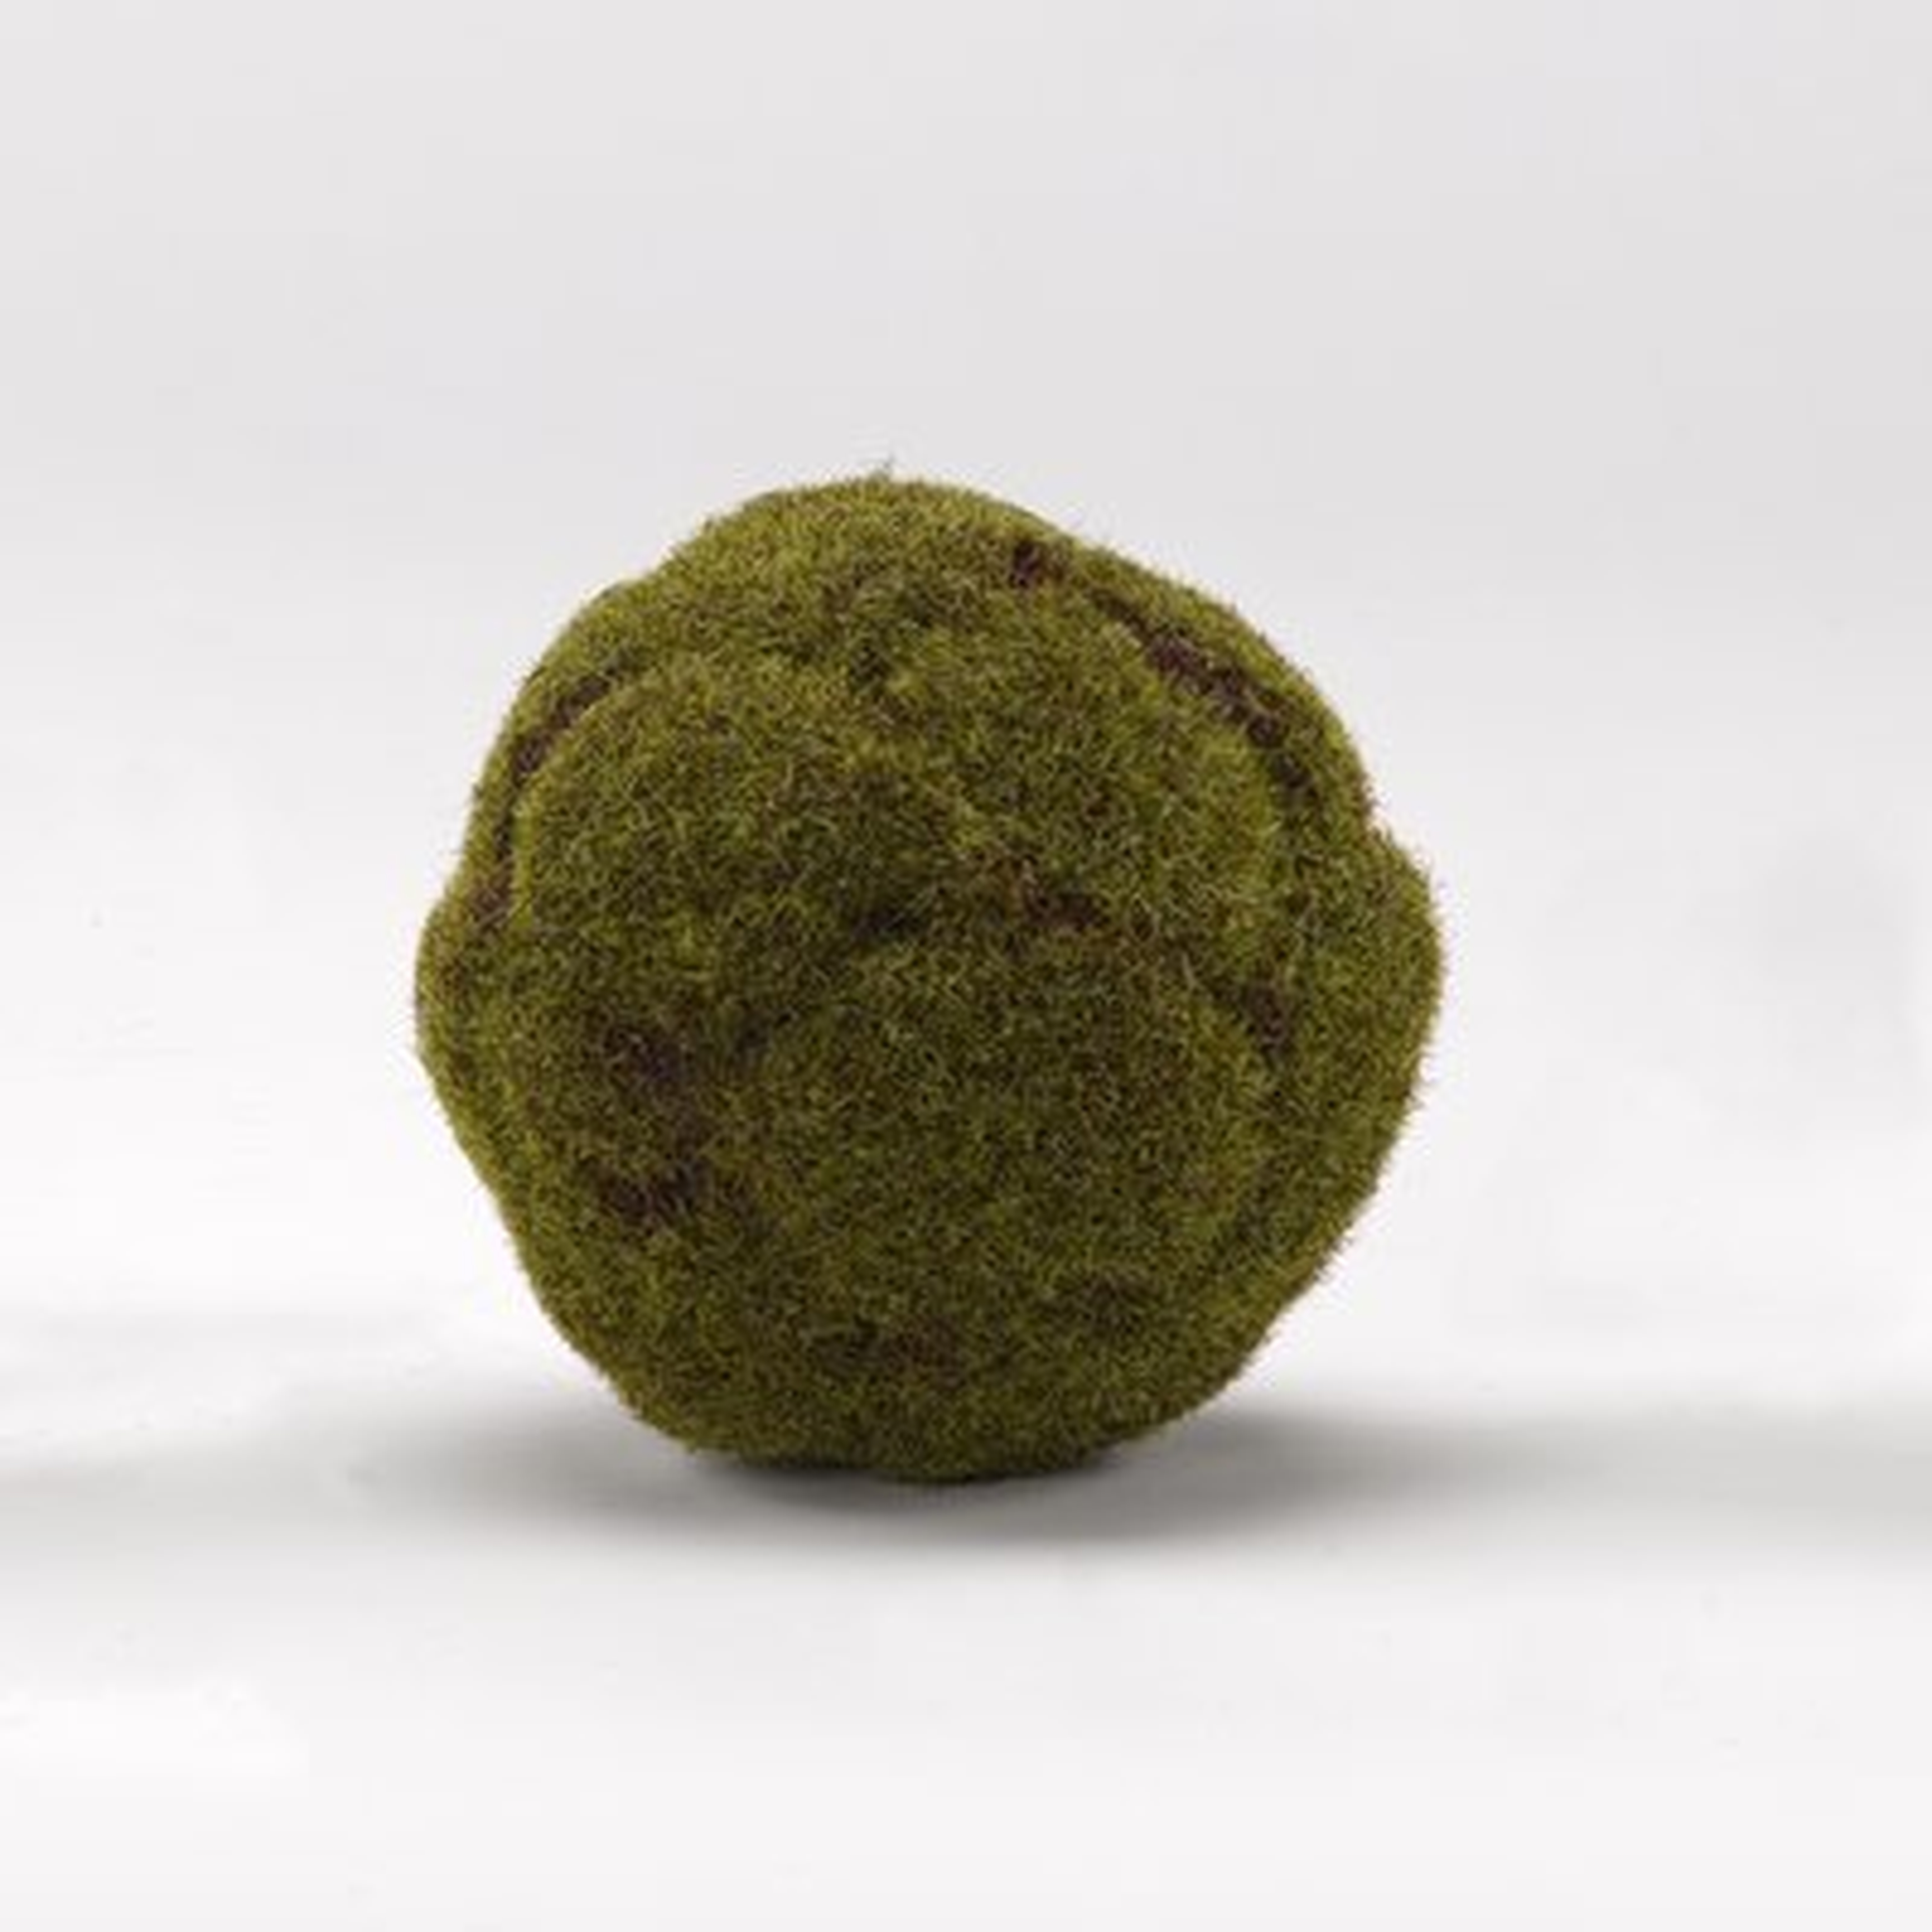 Millwood Pines Crackled Moss Ball Plant (Set of 3) - Wayfair